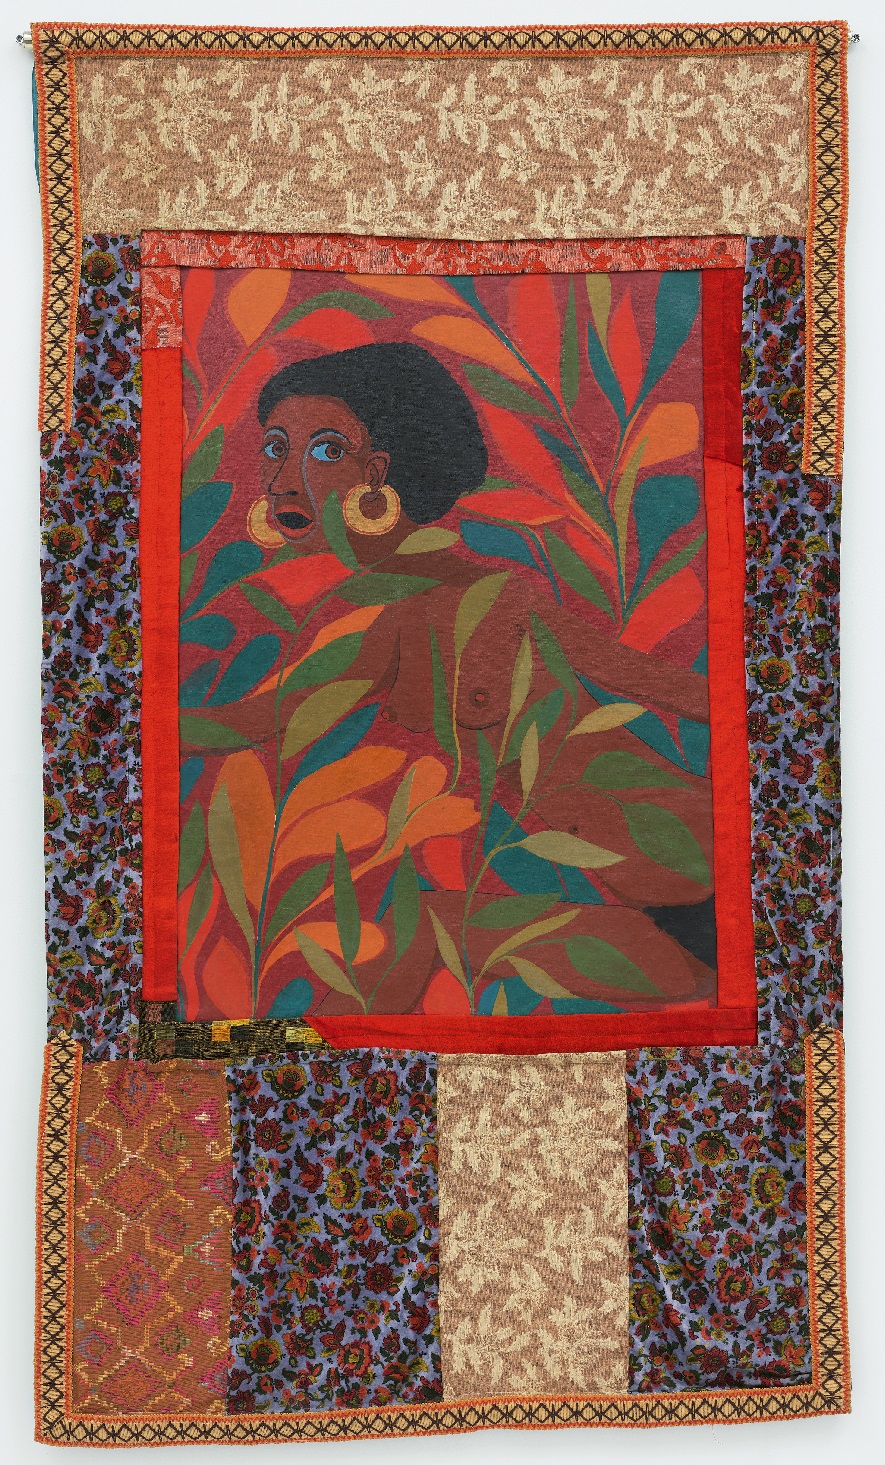 Faith Ringgold, Slave Rape #2: Run You Might Get Away, 1972, Huile sur toile et tissus, 234,6 × 133 cm, © Faith Ringgold / ARS, NY  and DACS, London, courtesy ACA Galleries, New York 2022. Photo: Tom Powel